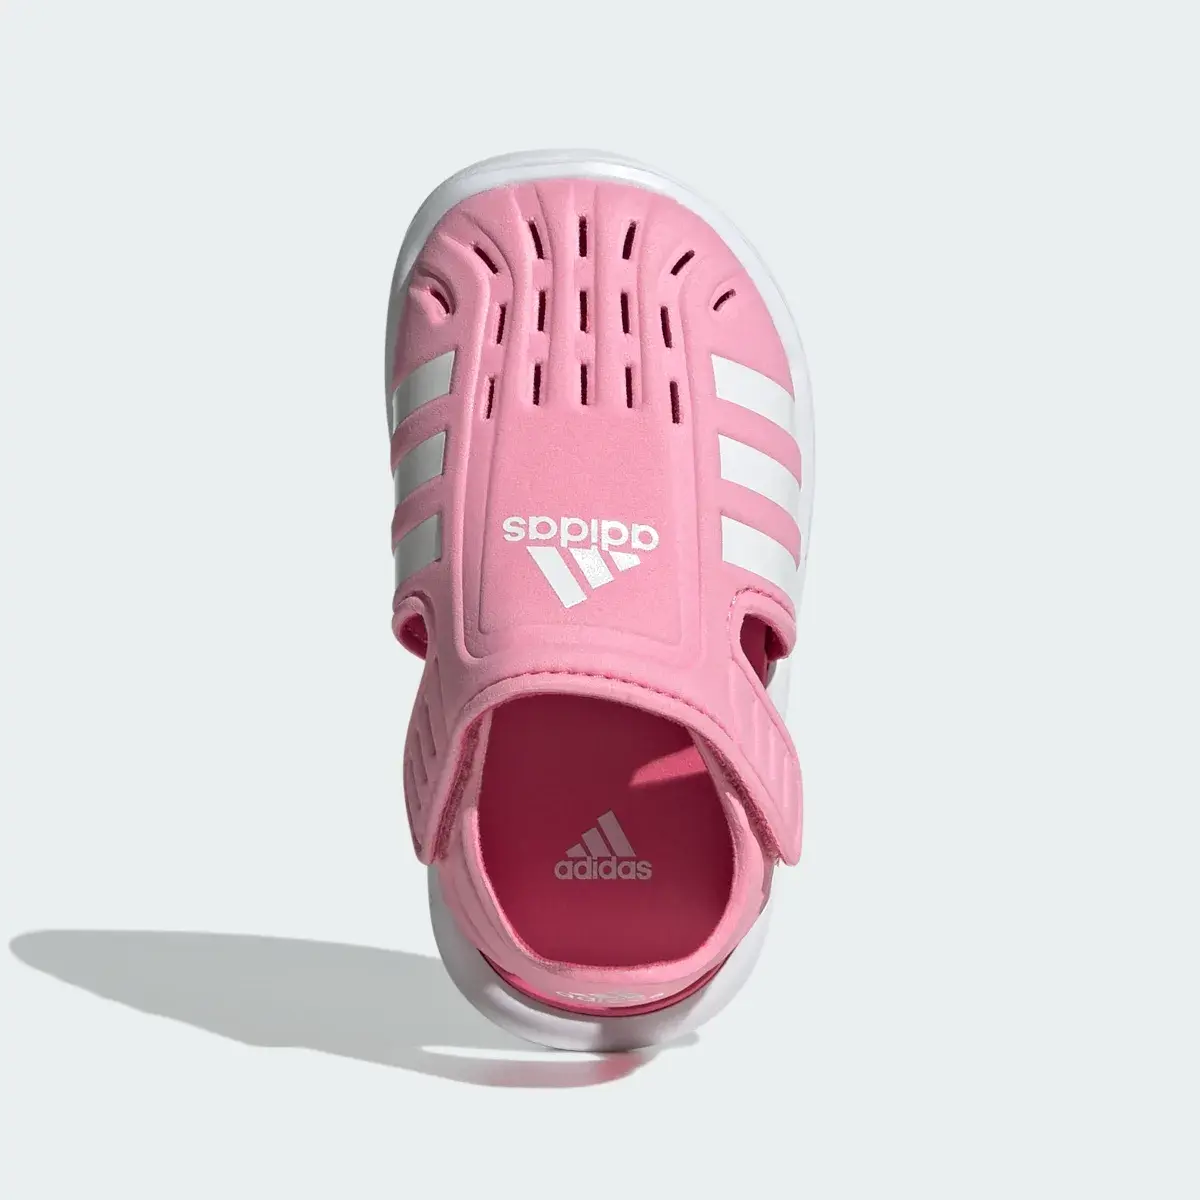 Adidas Sandale Closed-Toe Summer Water. 3